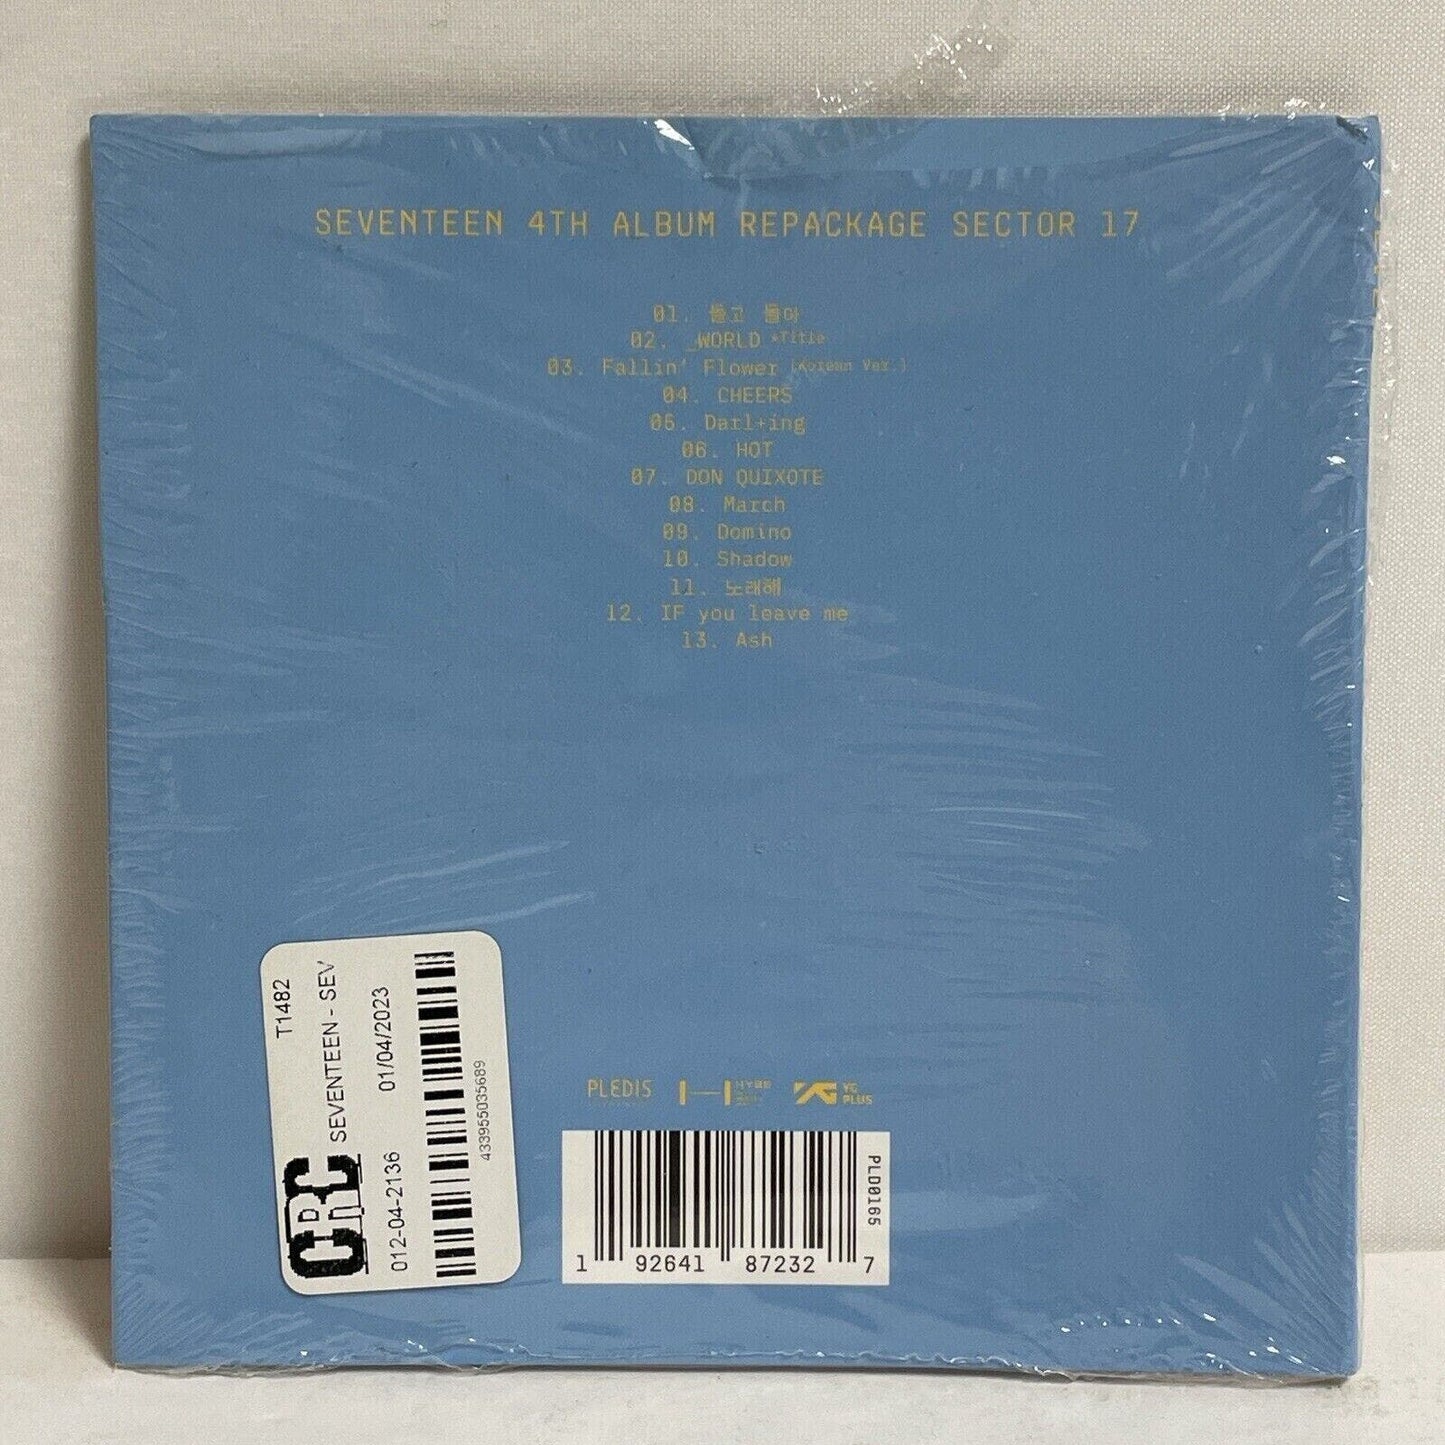 SECTOR 17, Seventeen 4th Album Repackage, Music CD, by Seventeen